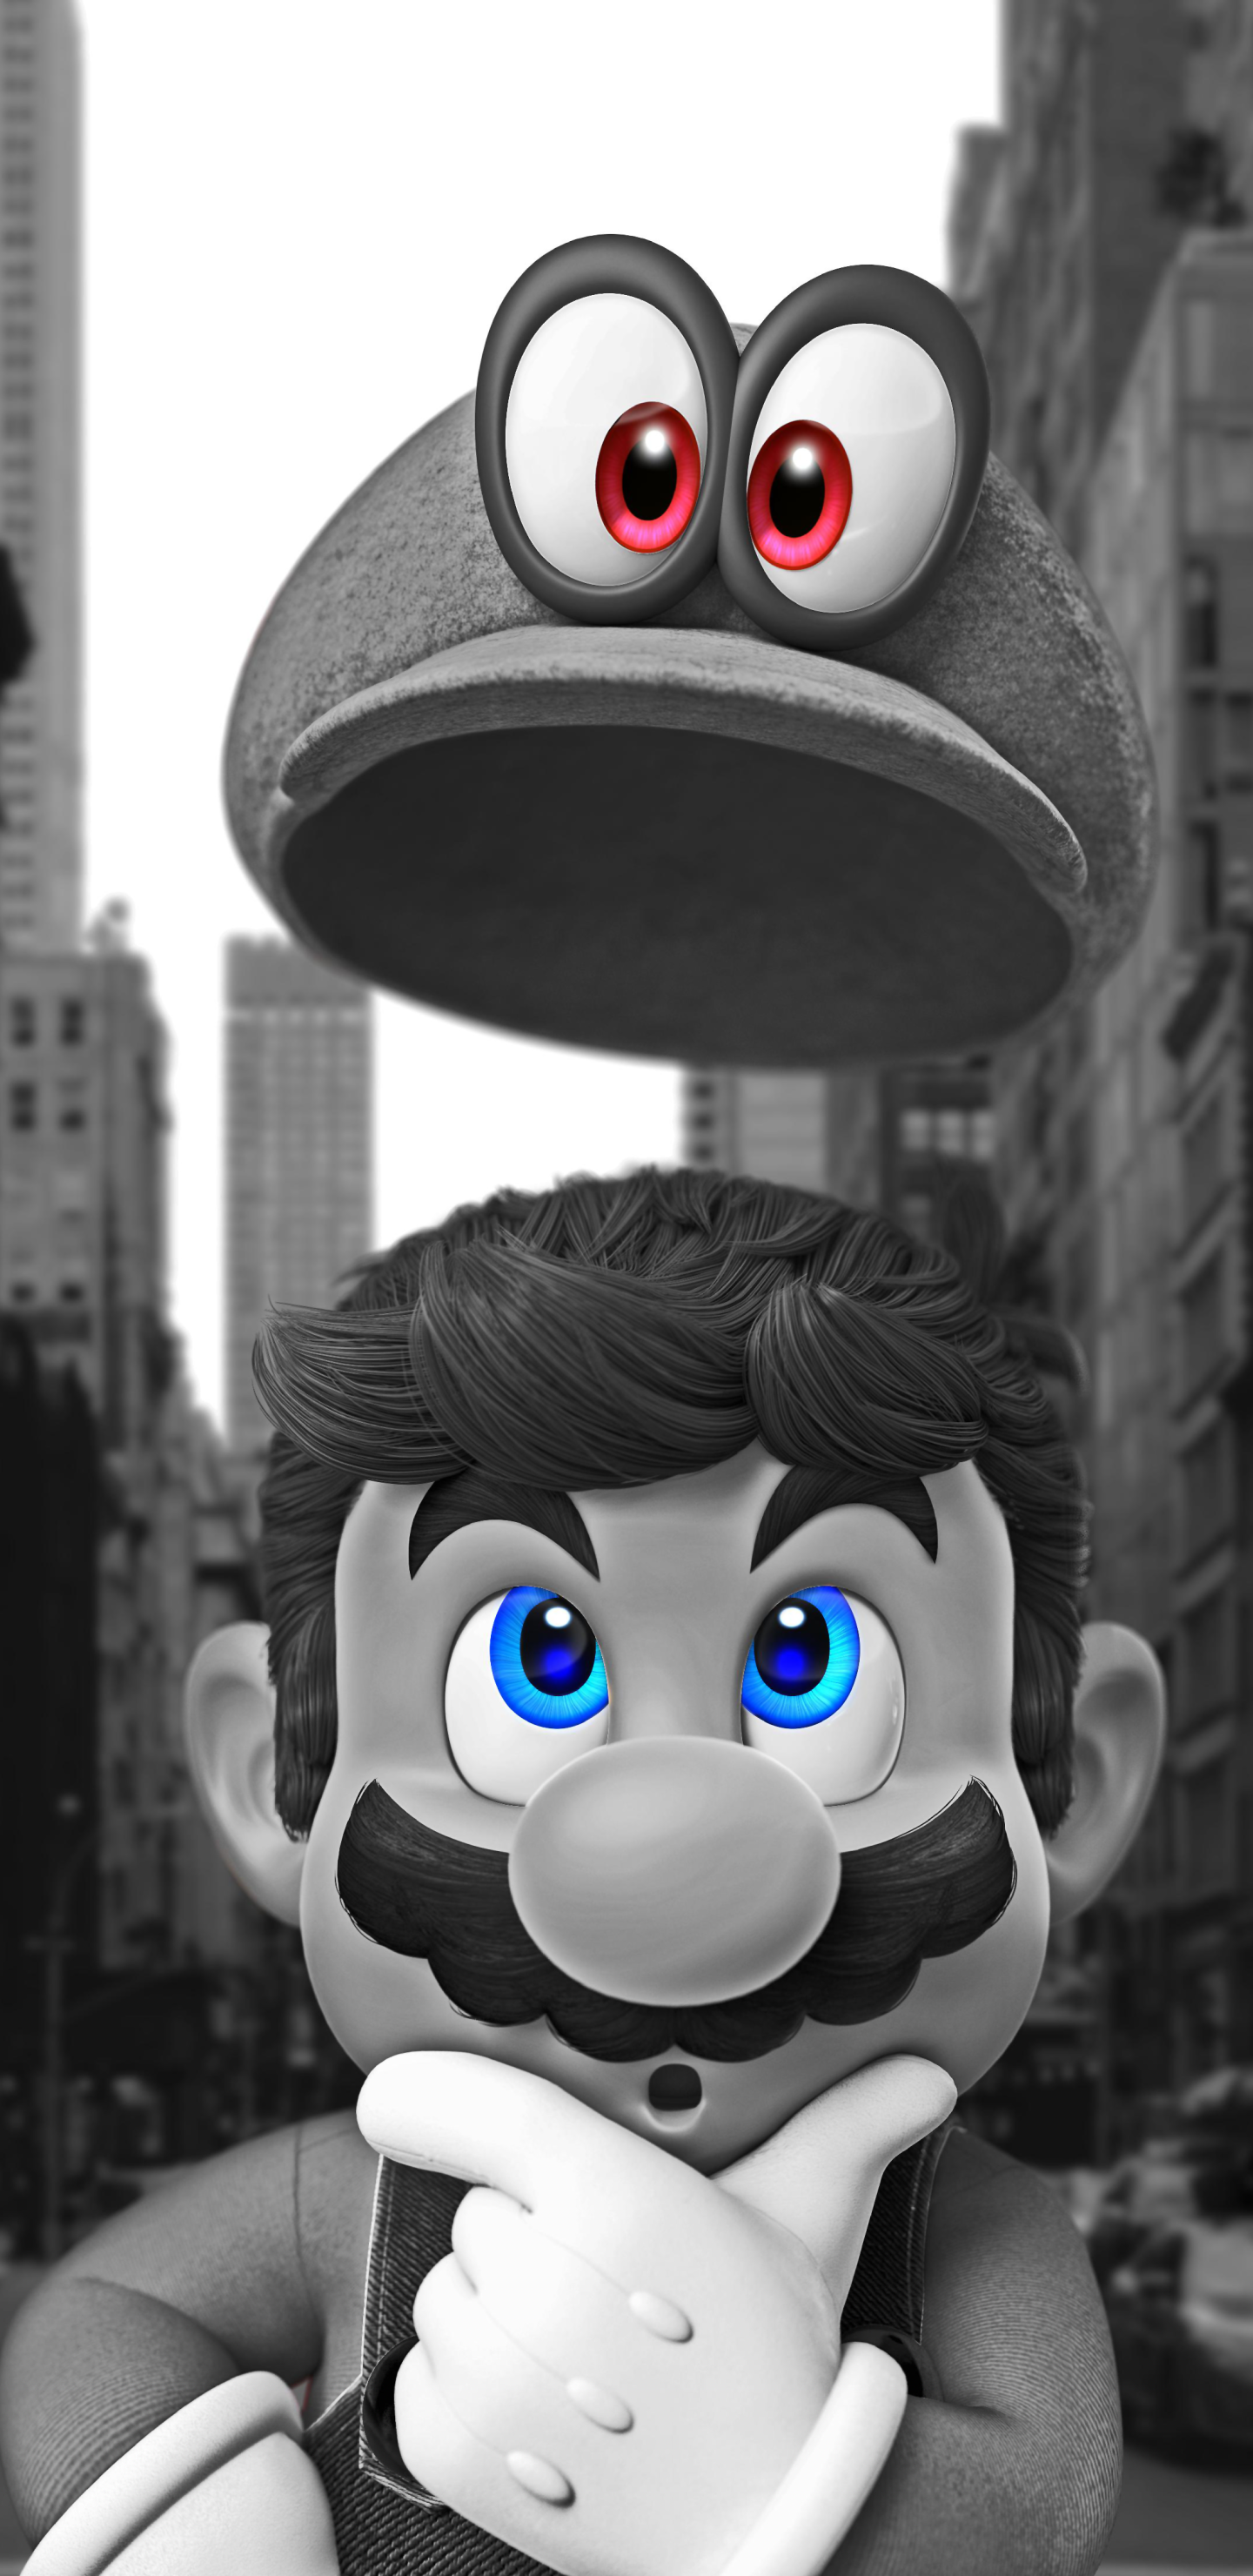 Video Game Super Mario Odyssey (1440x2960) Wallpaper